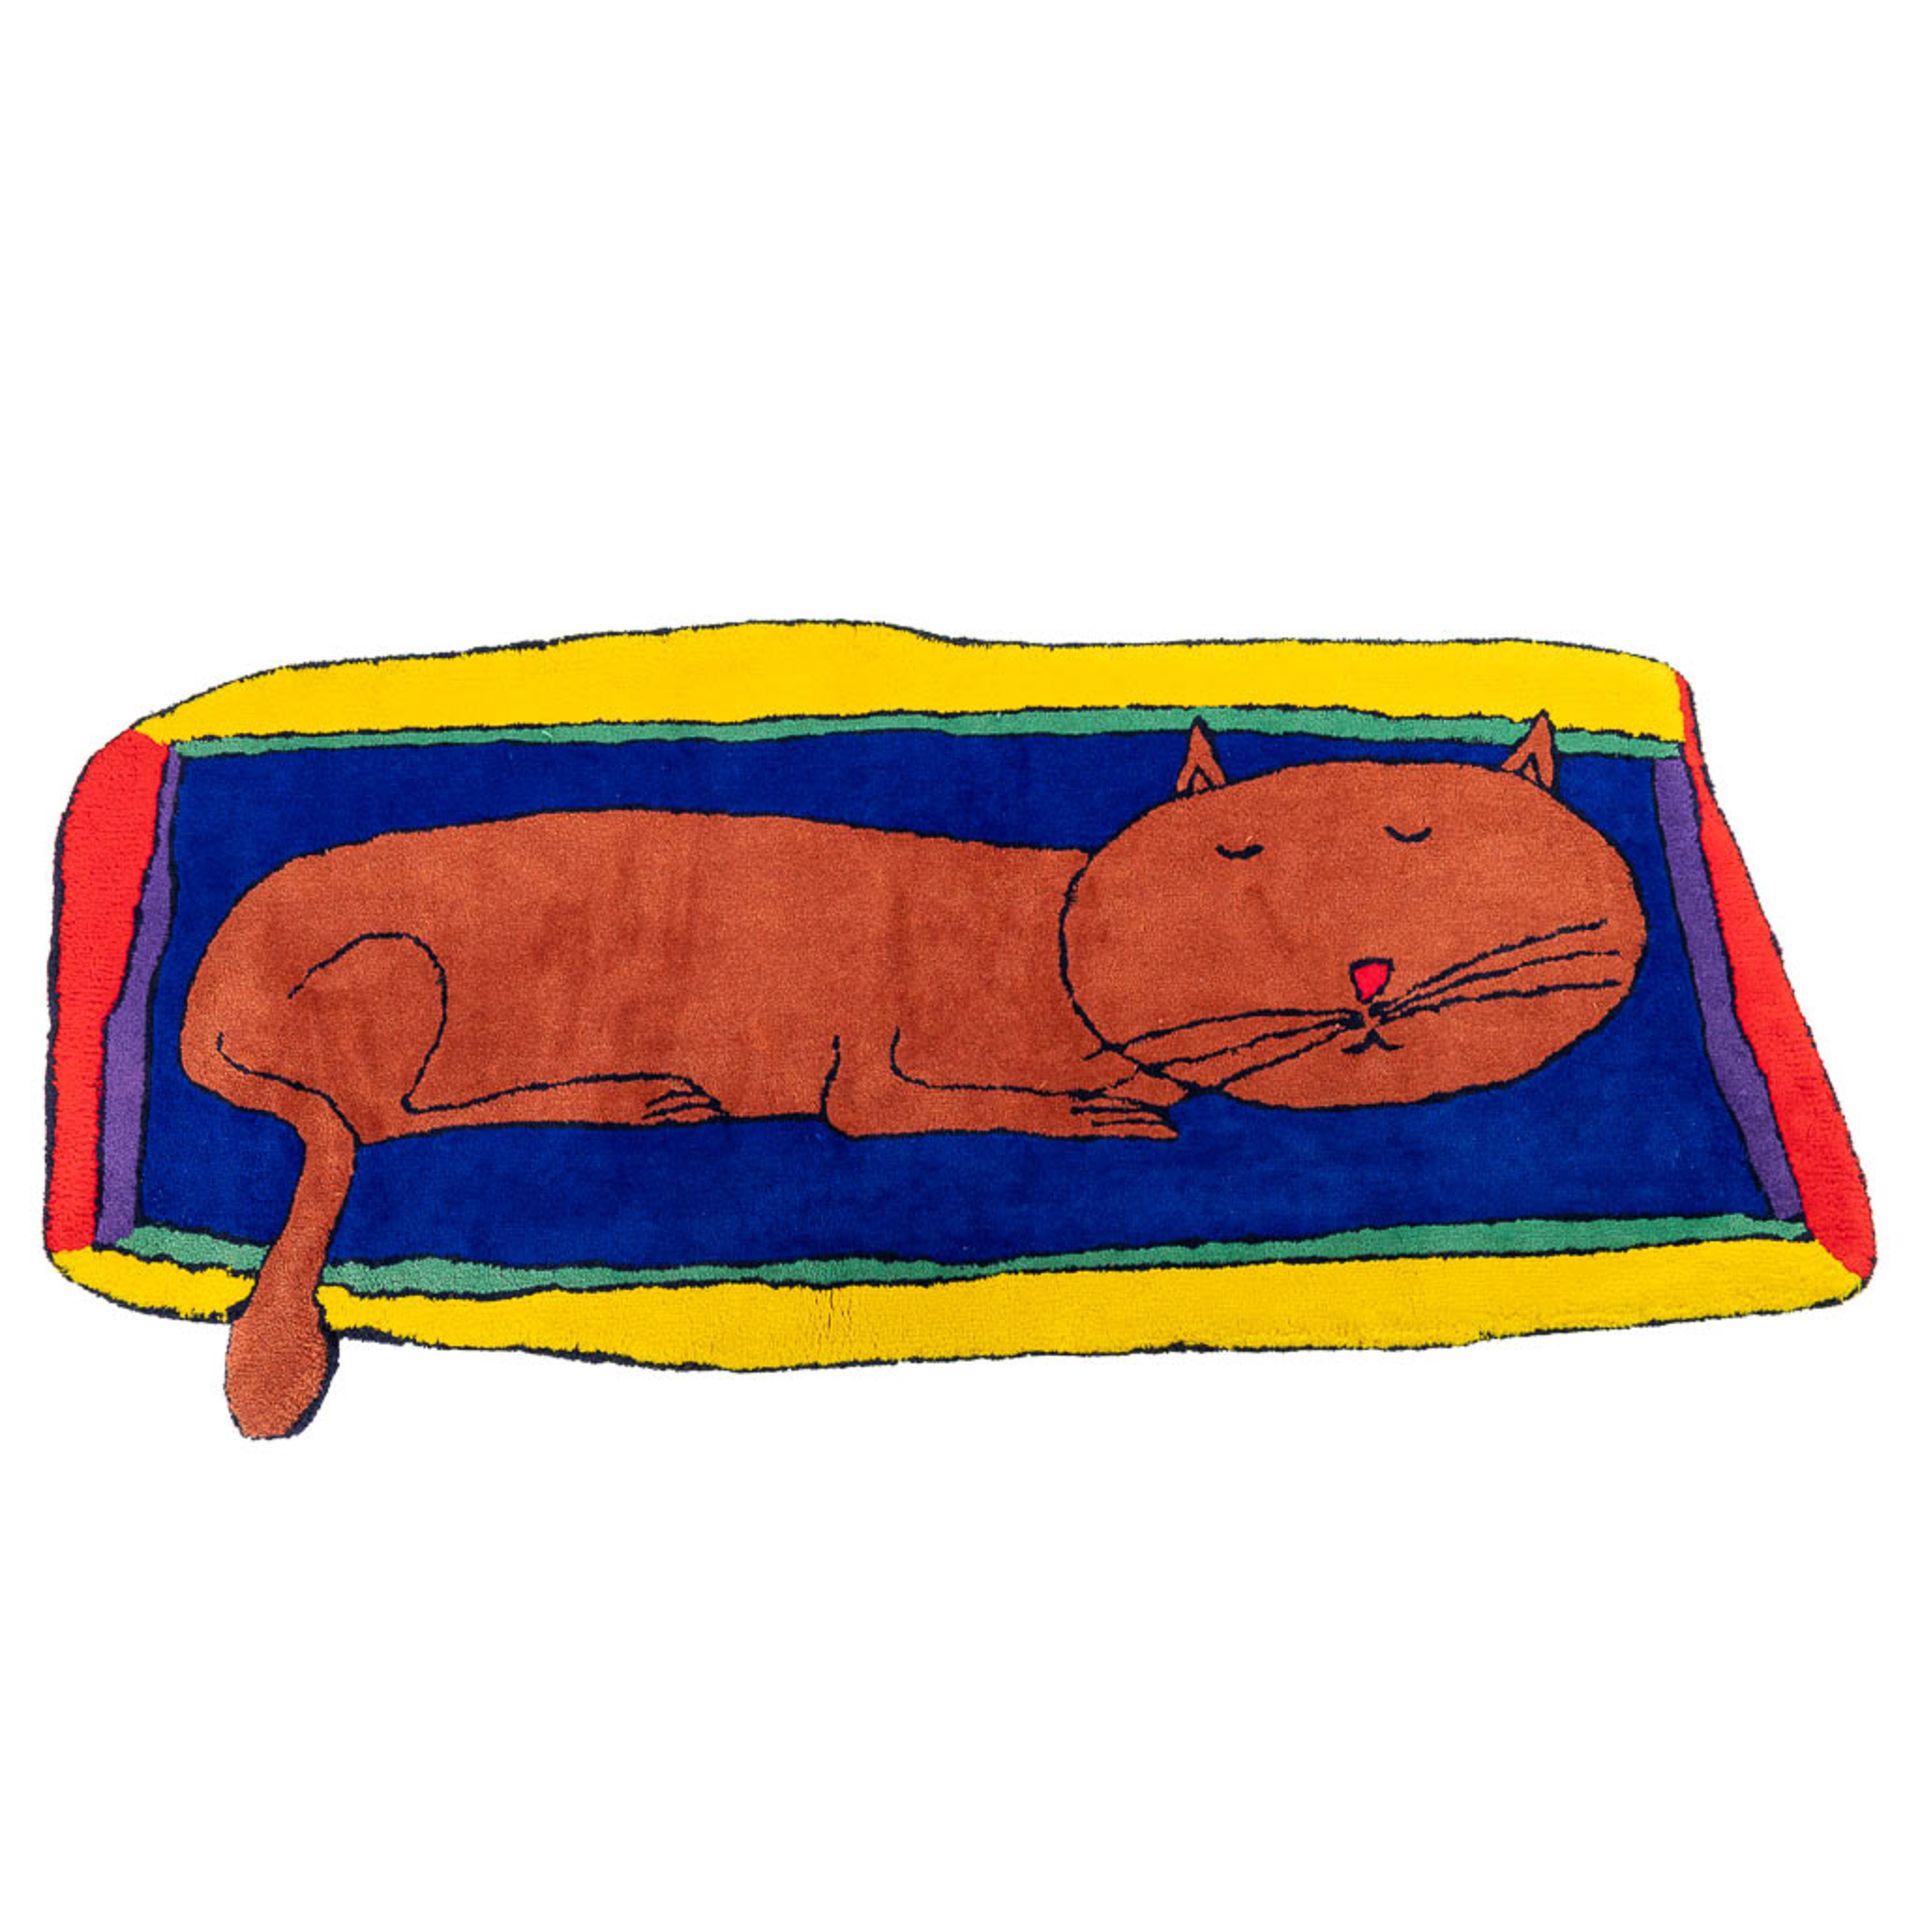 Vera VERMEERSCH (XX-XXI) 'Cat' a carpet. (L: 90 x W: 190 cm)